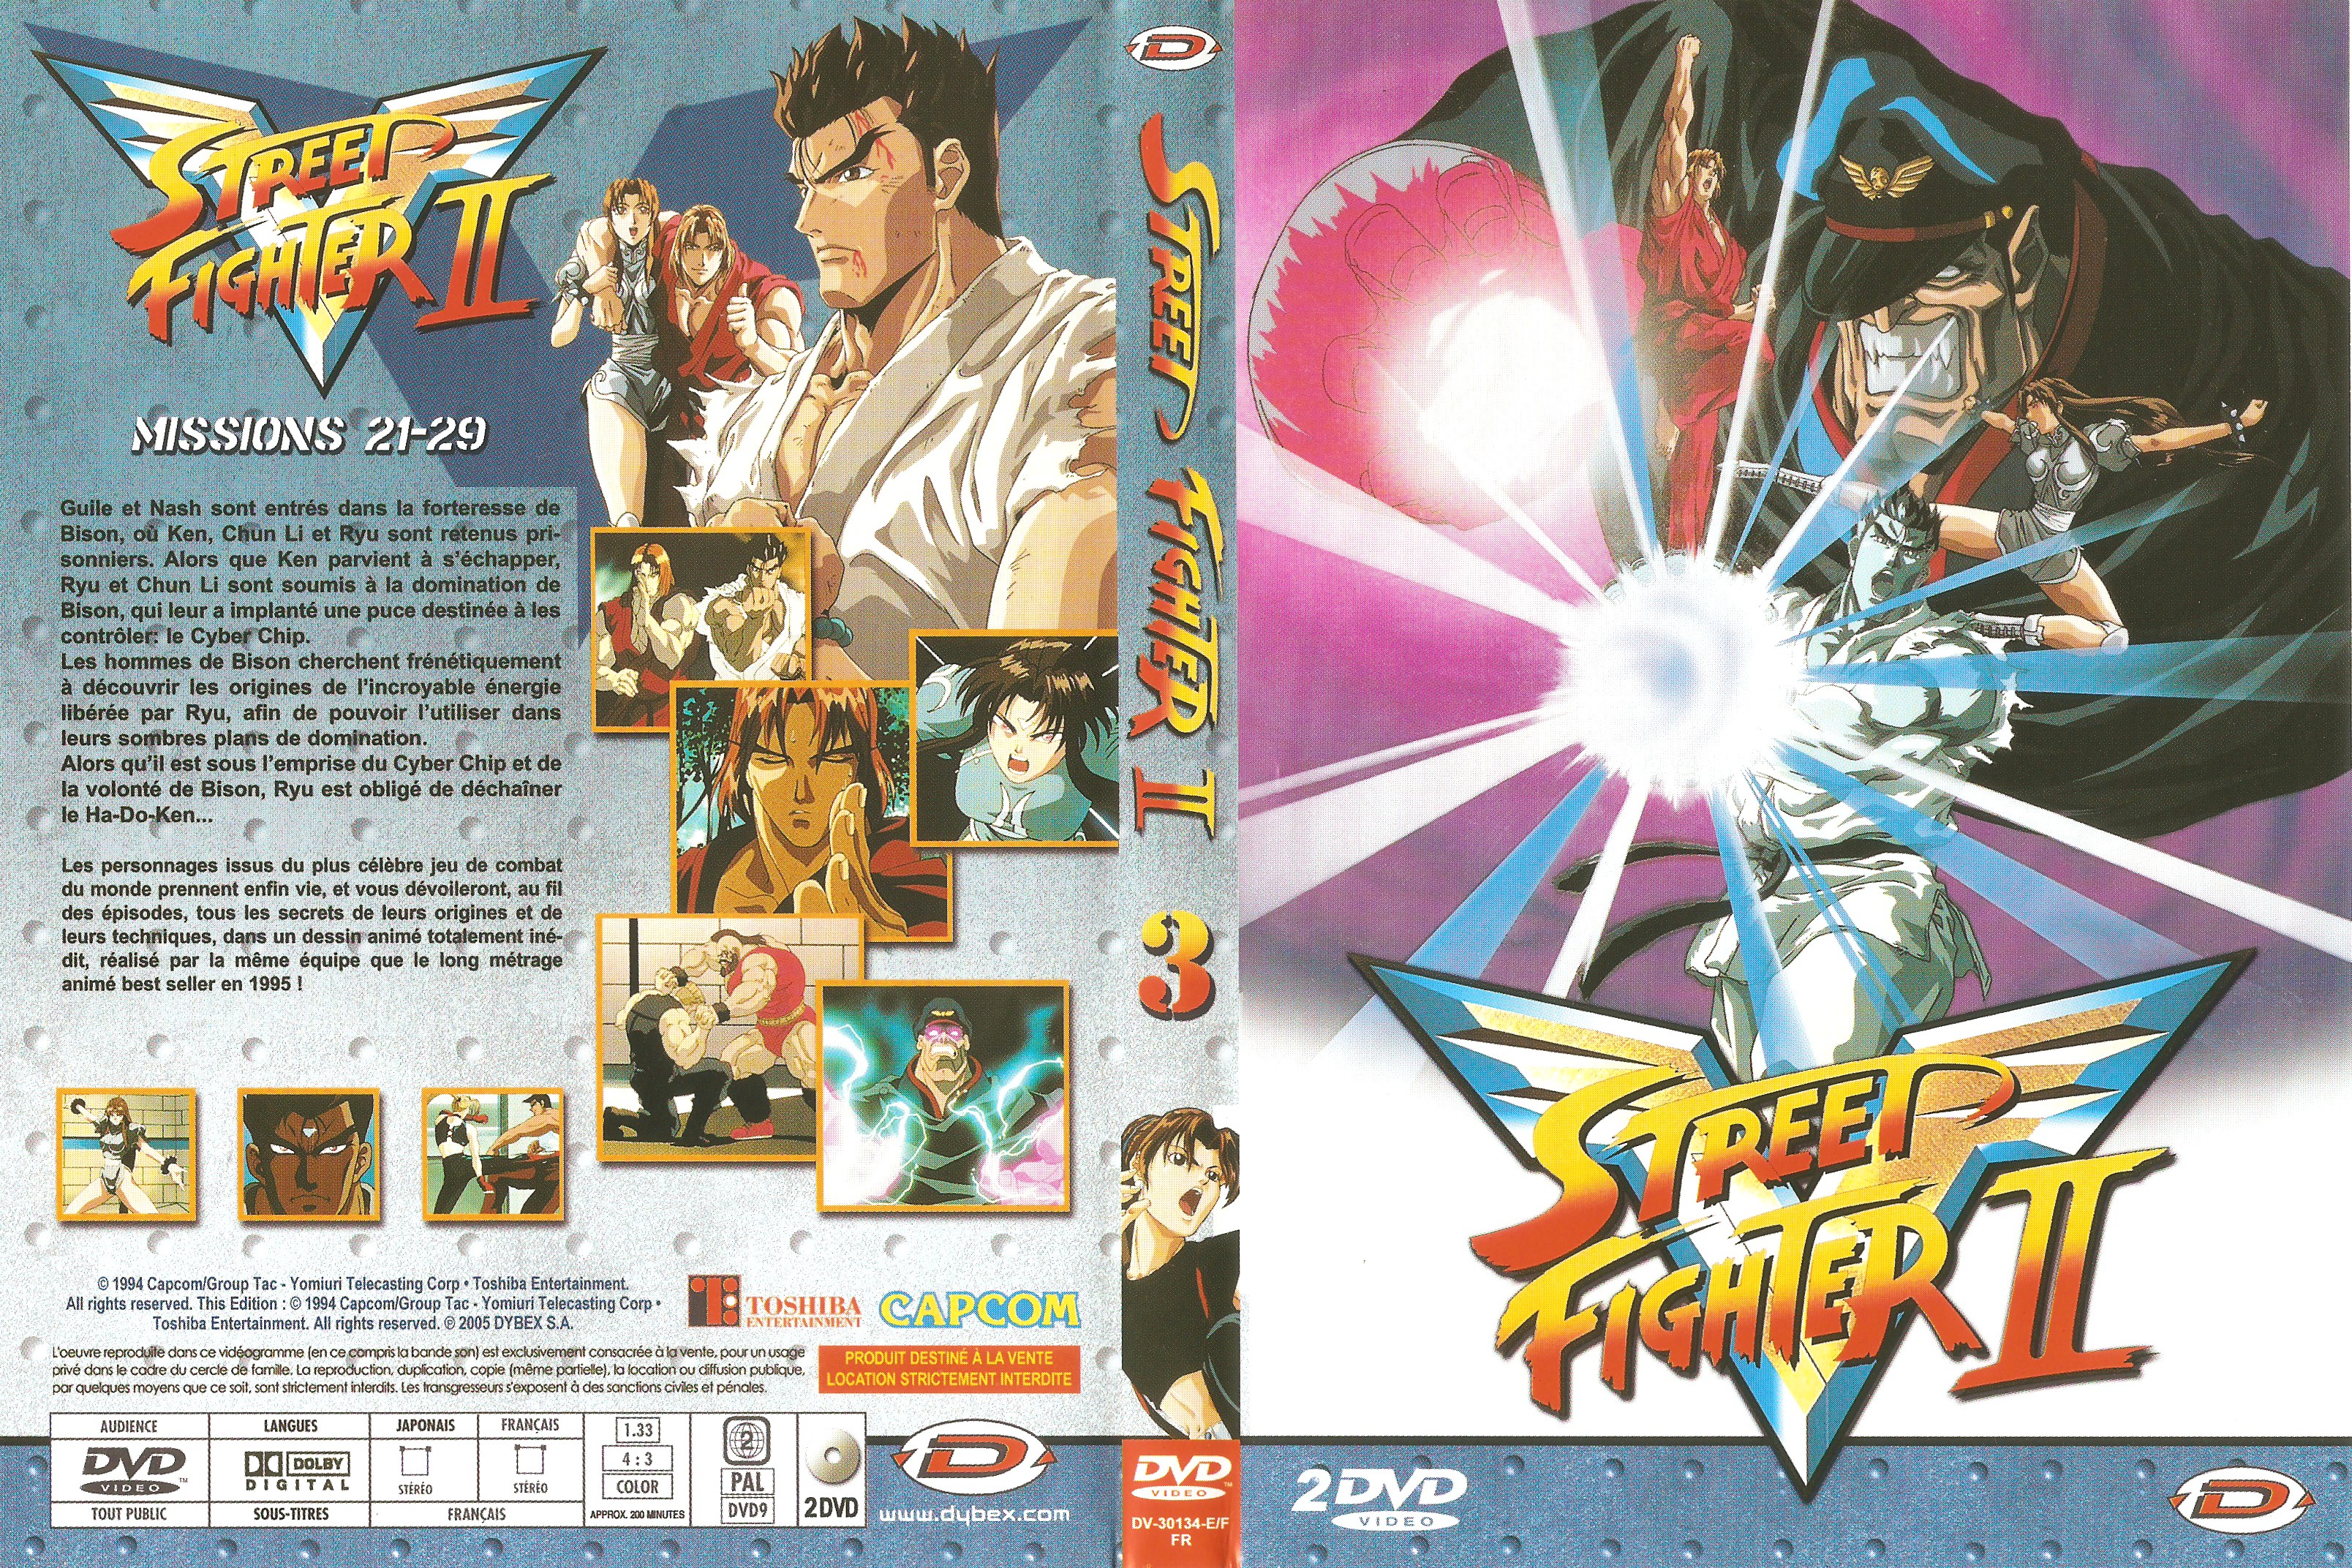 Jaquette DVD Street fighter 2 vol 3